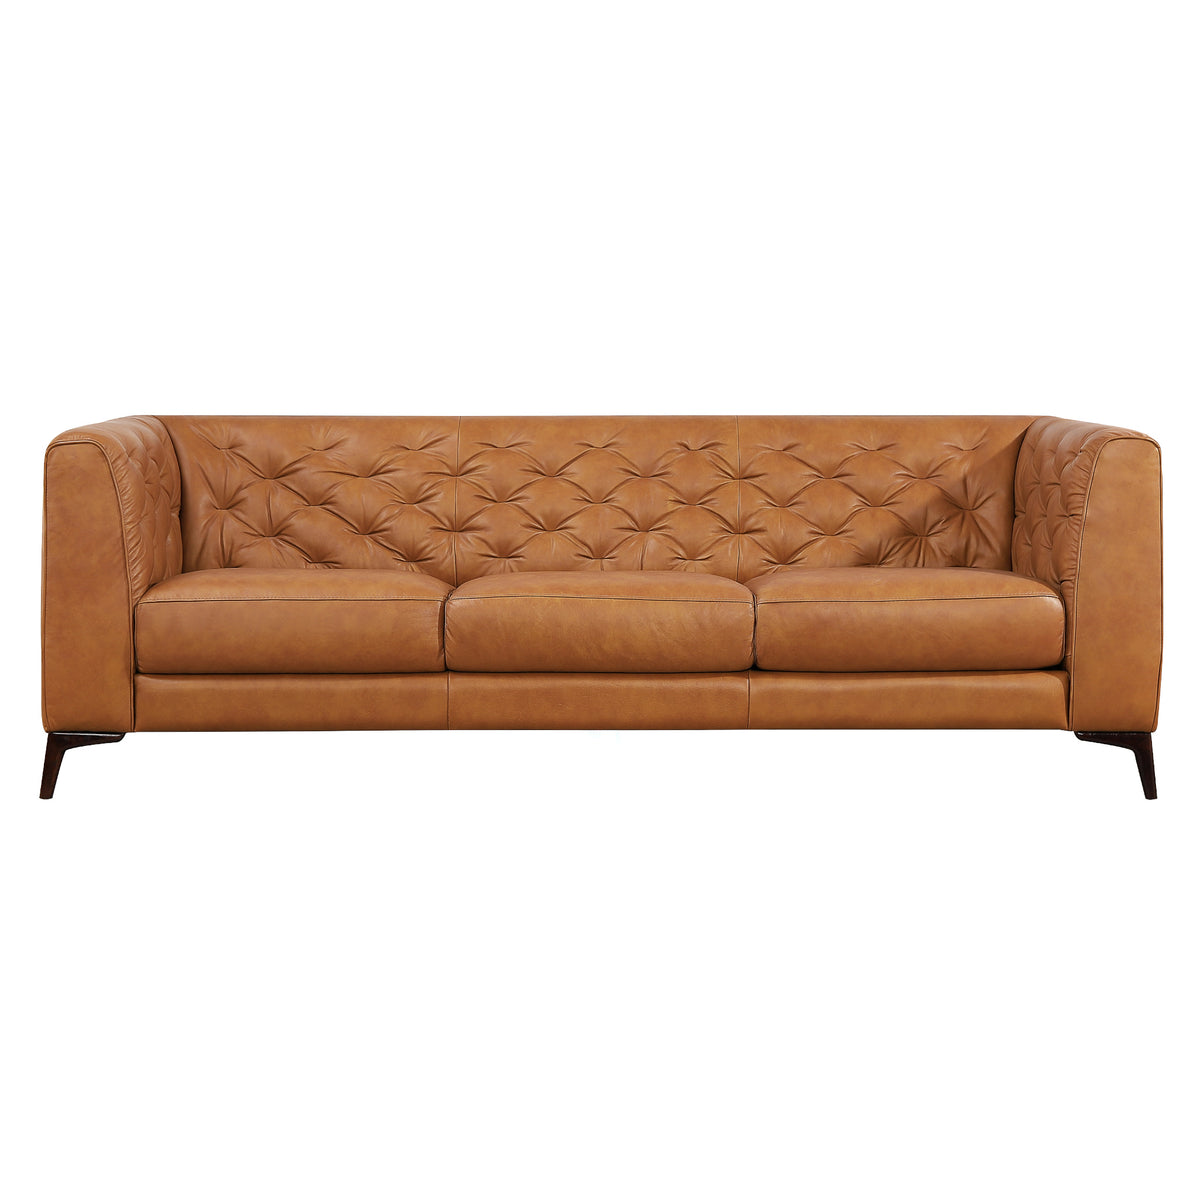 Fargo Tan Leather Sofa